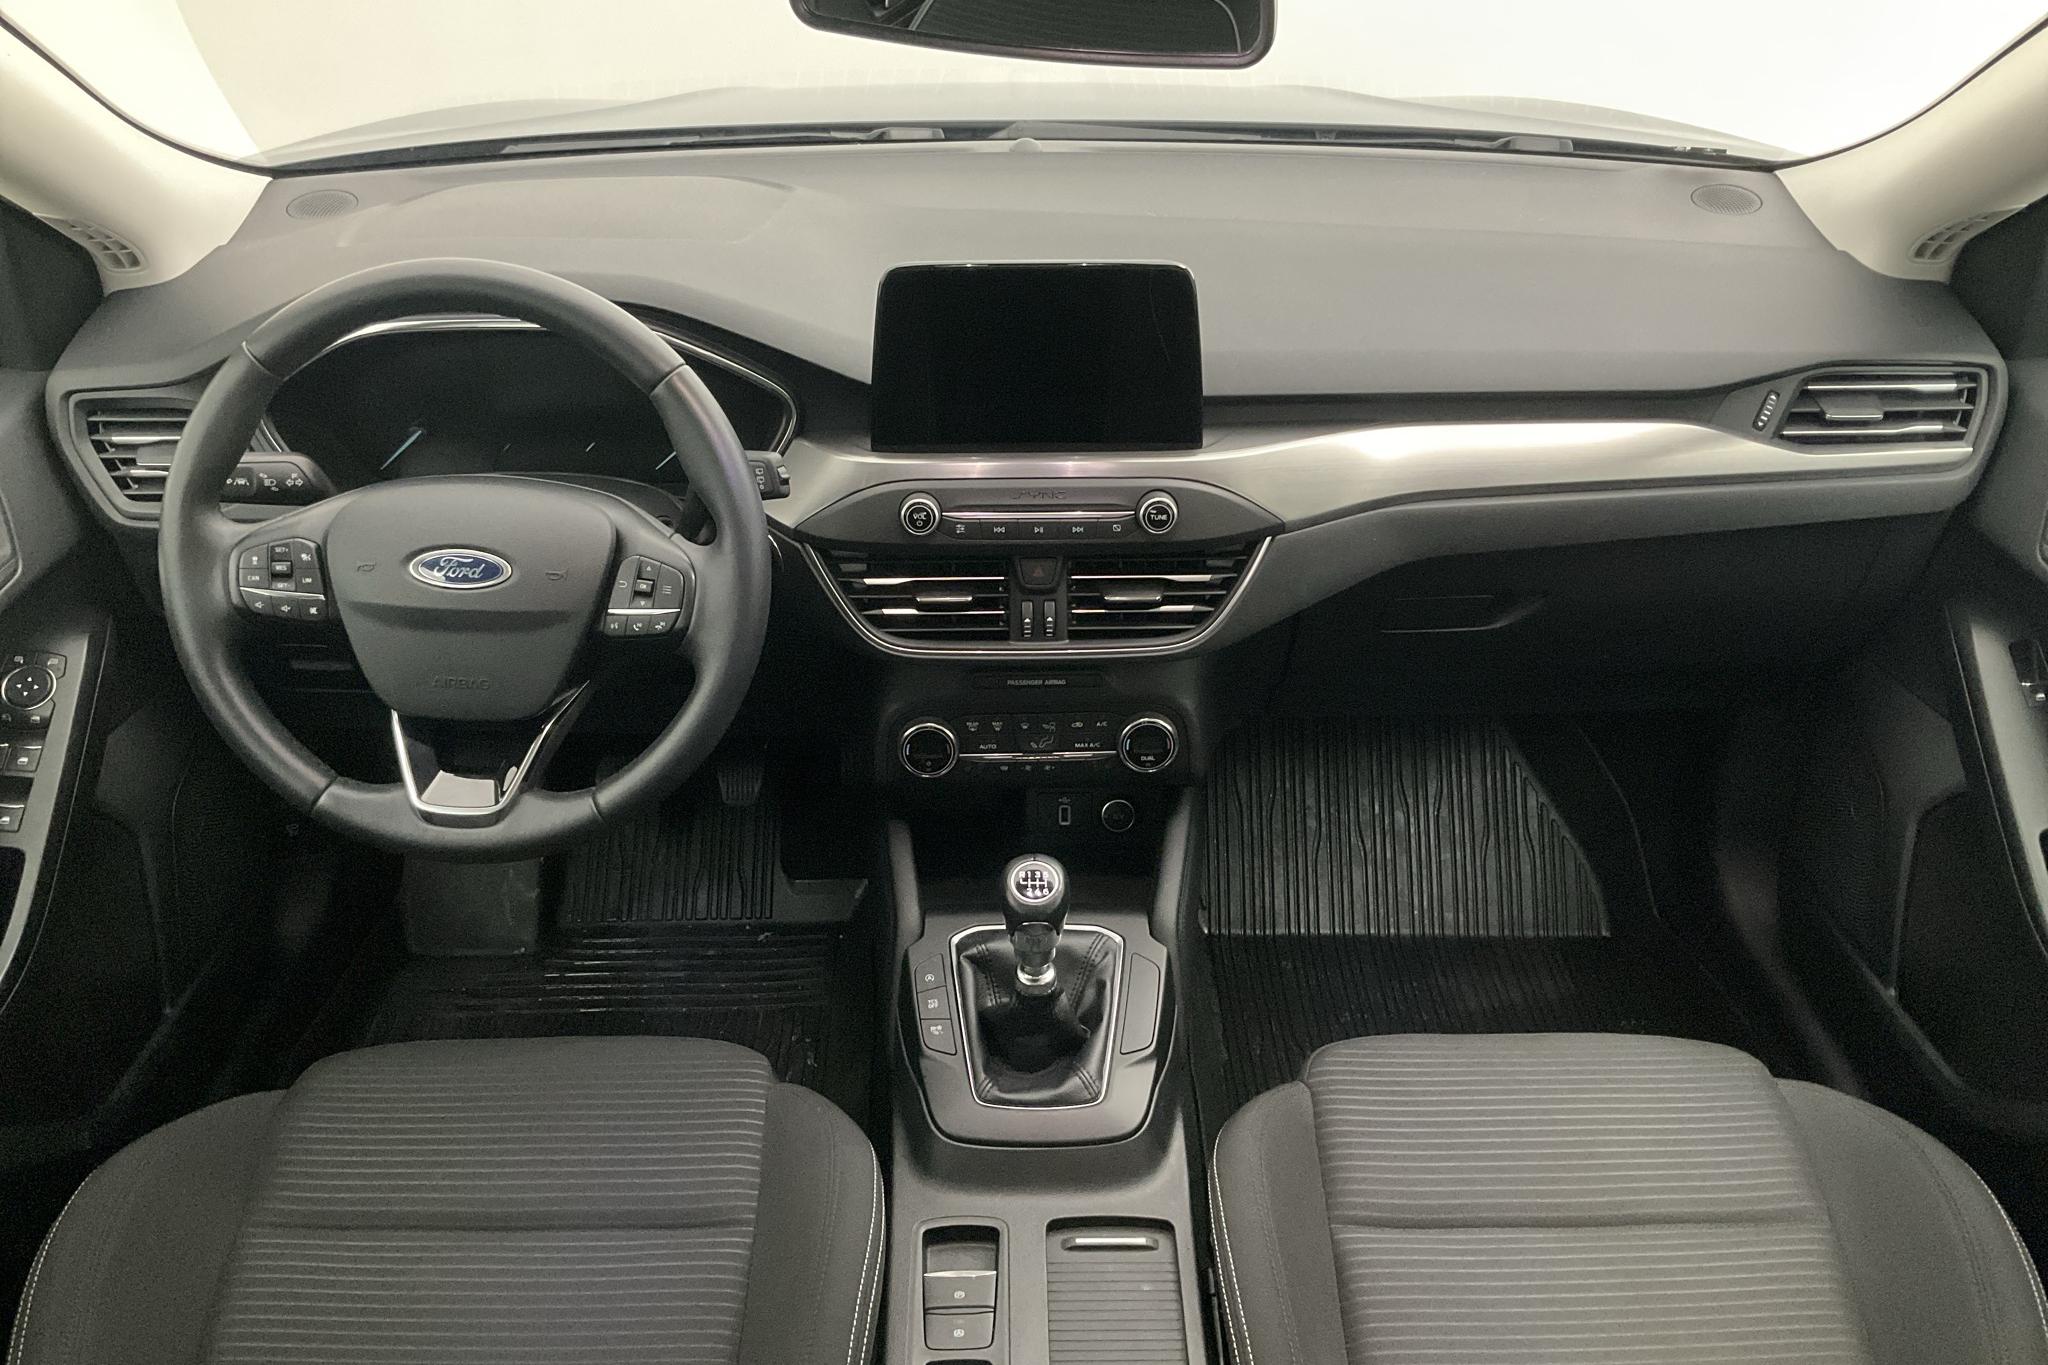 Ford Focus 1.5 TDCi Kombi (120hk) - 66 730 km - Manual - blue - 2019